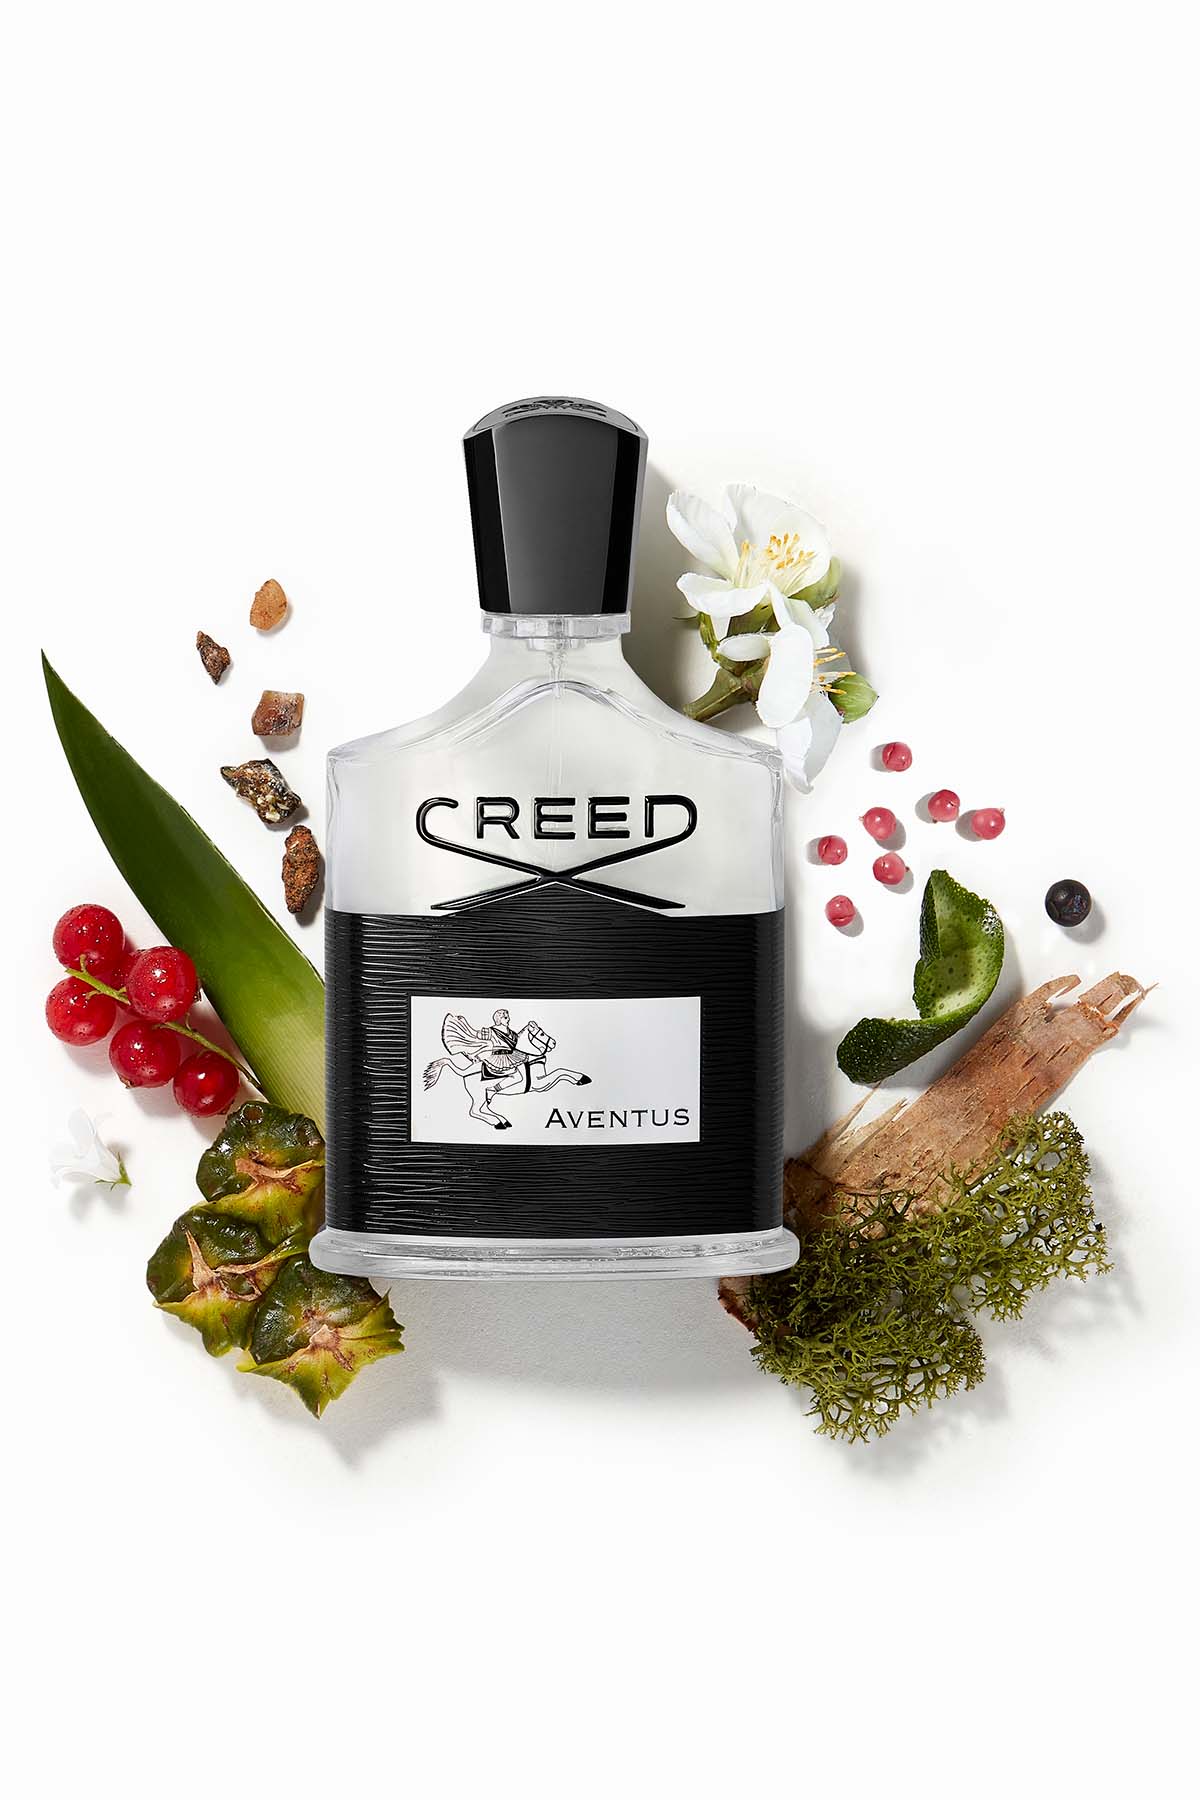 Creed Aventus Eau de Parfum Ingredients